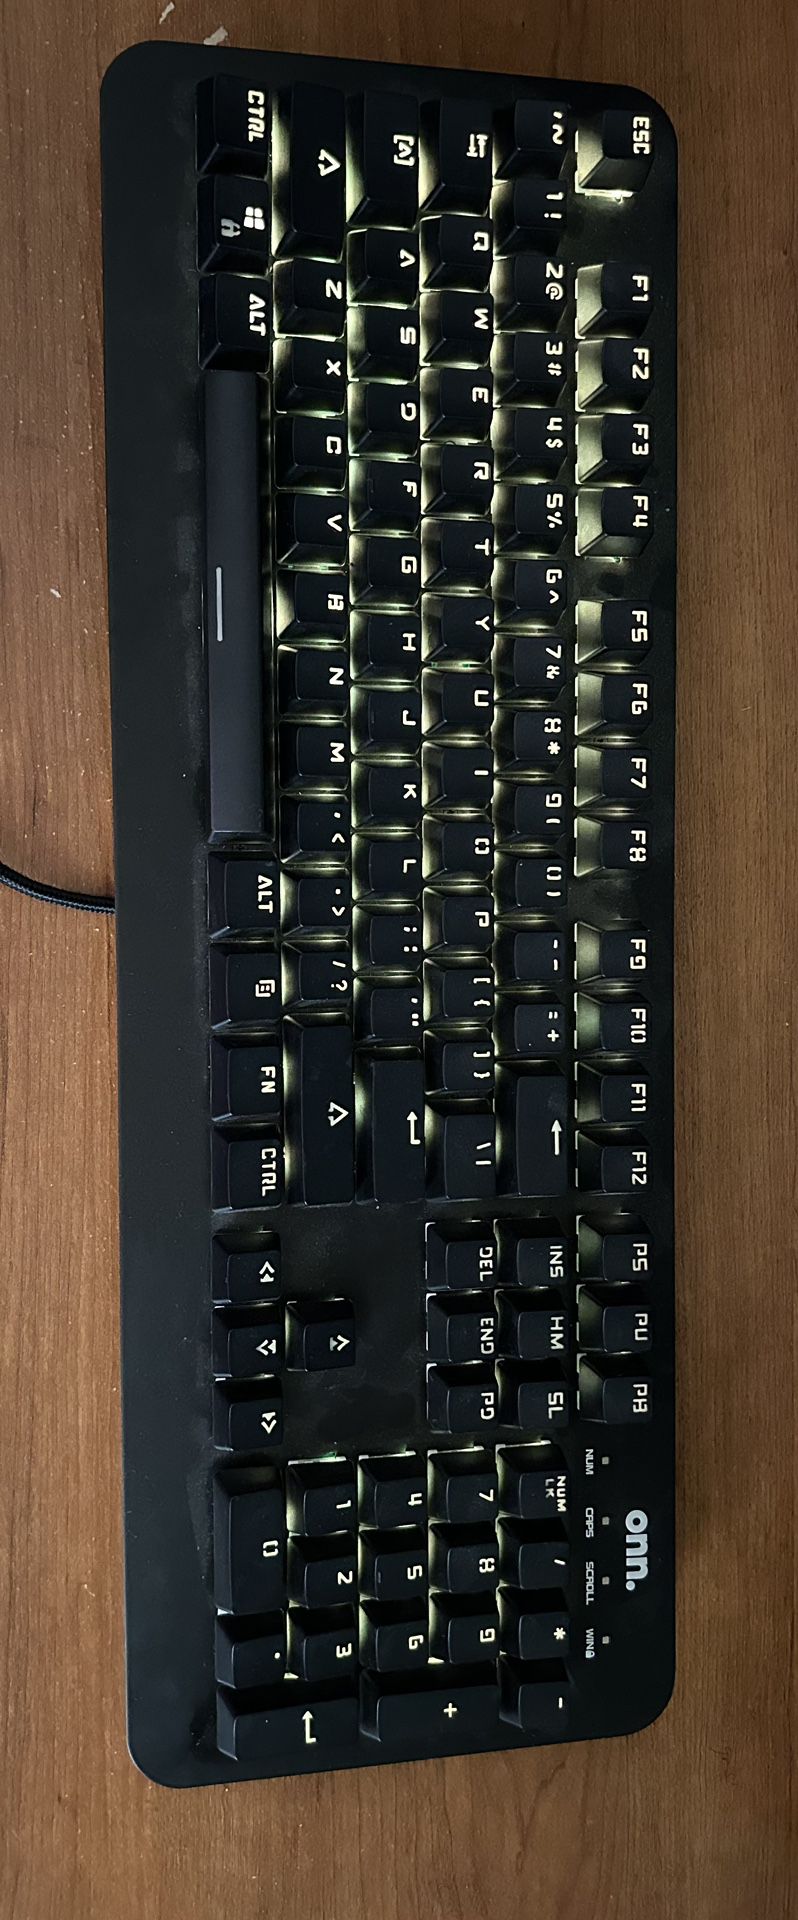 Onn keyboard 